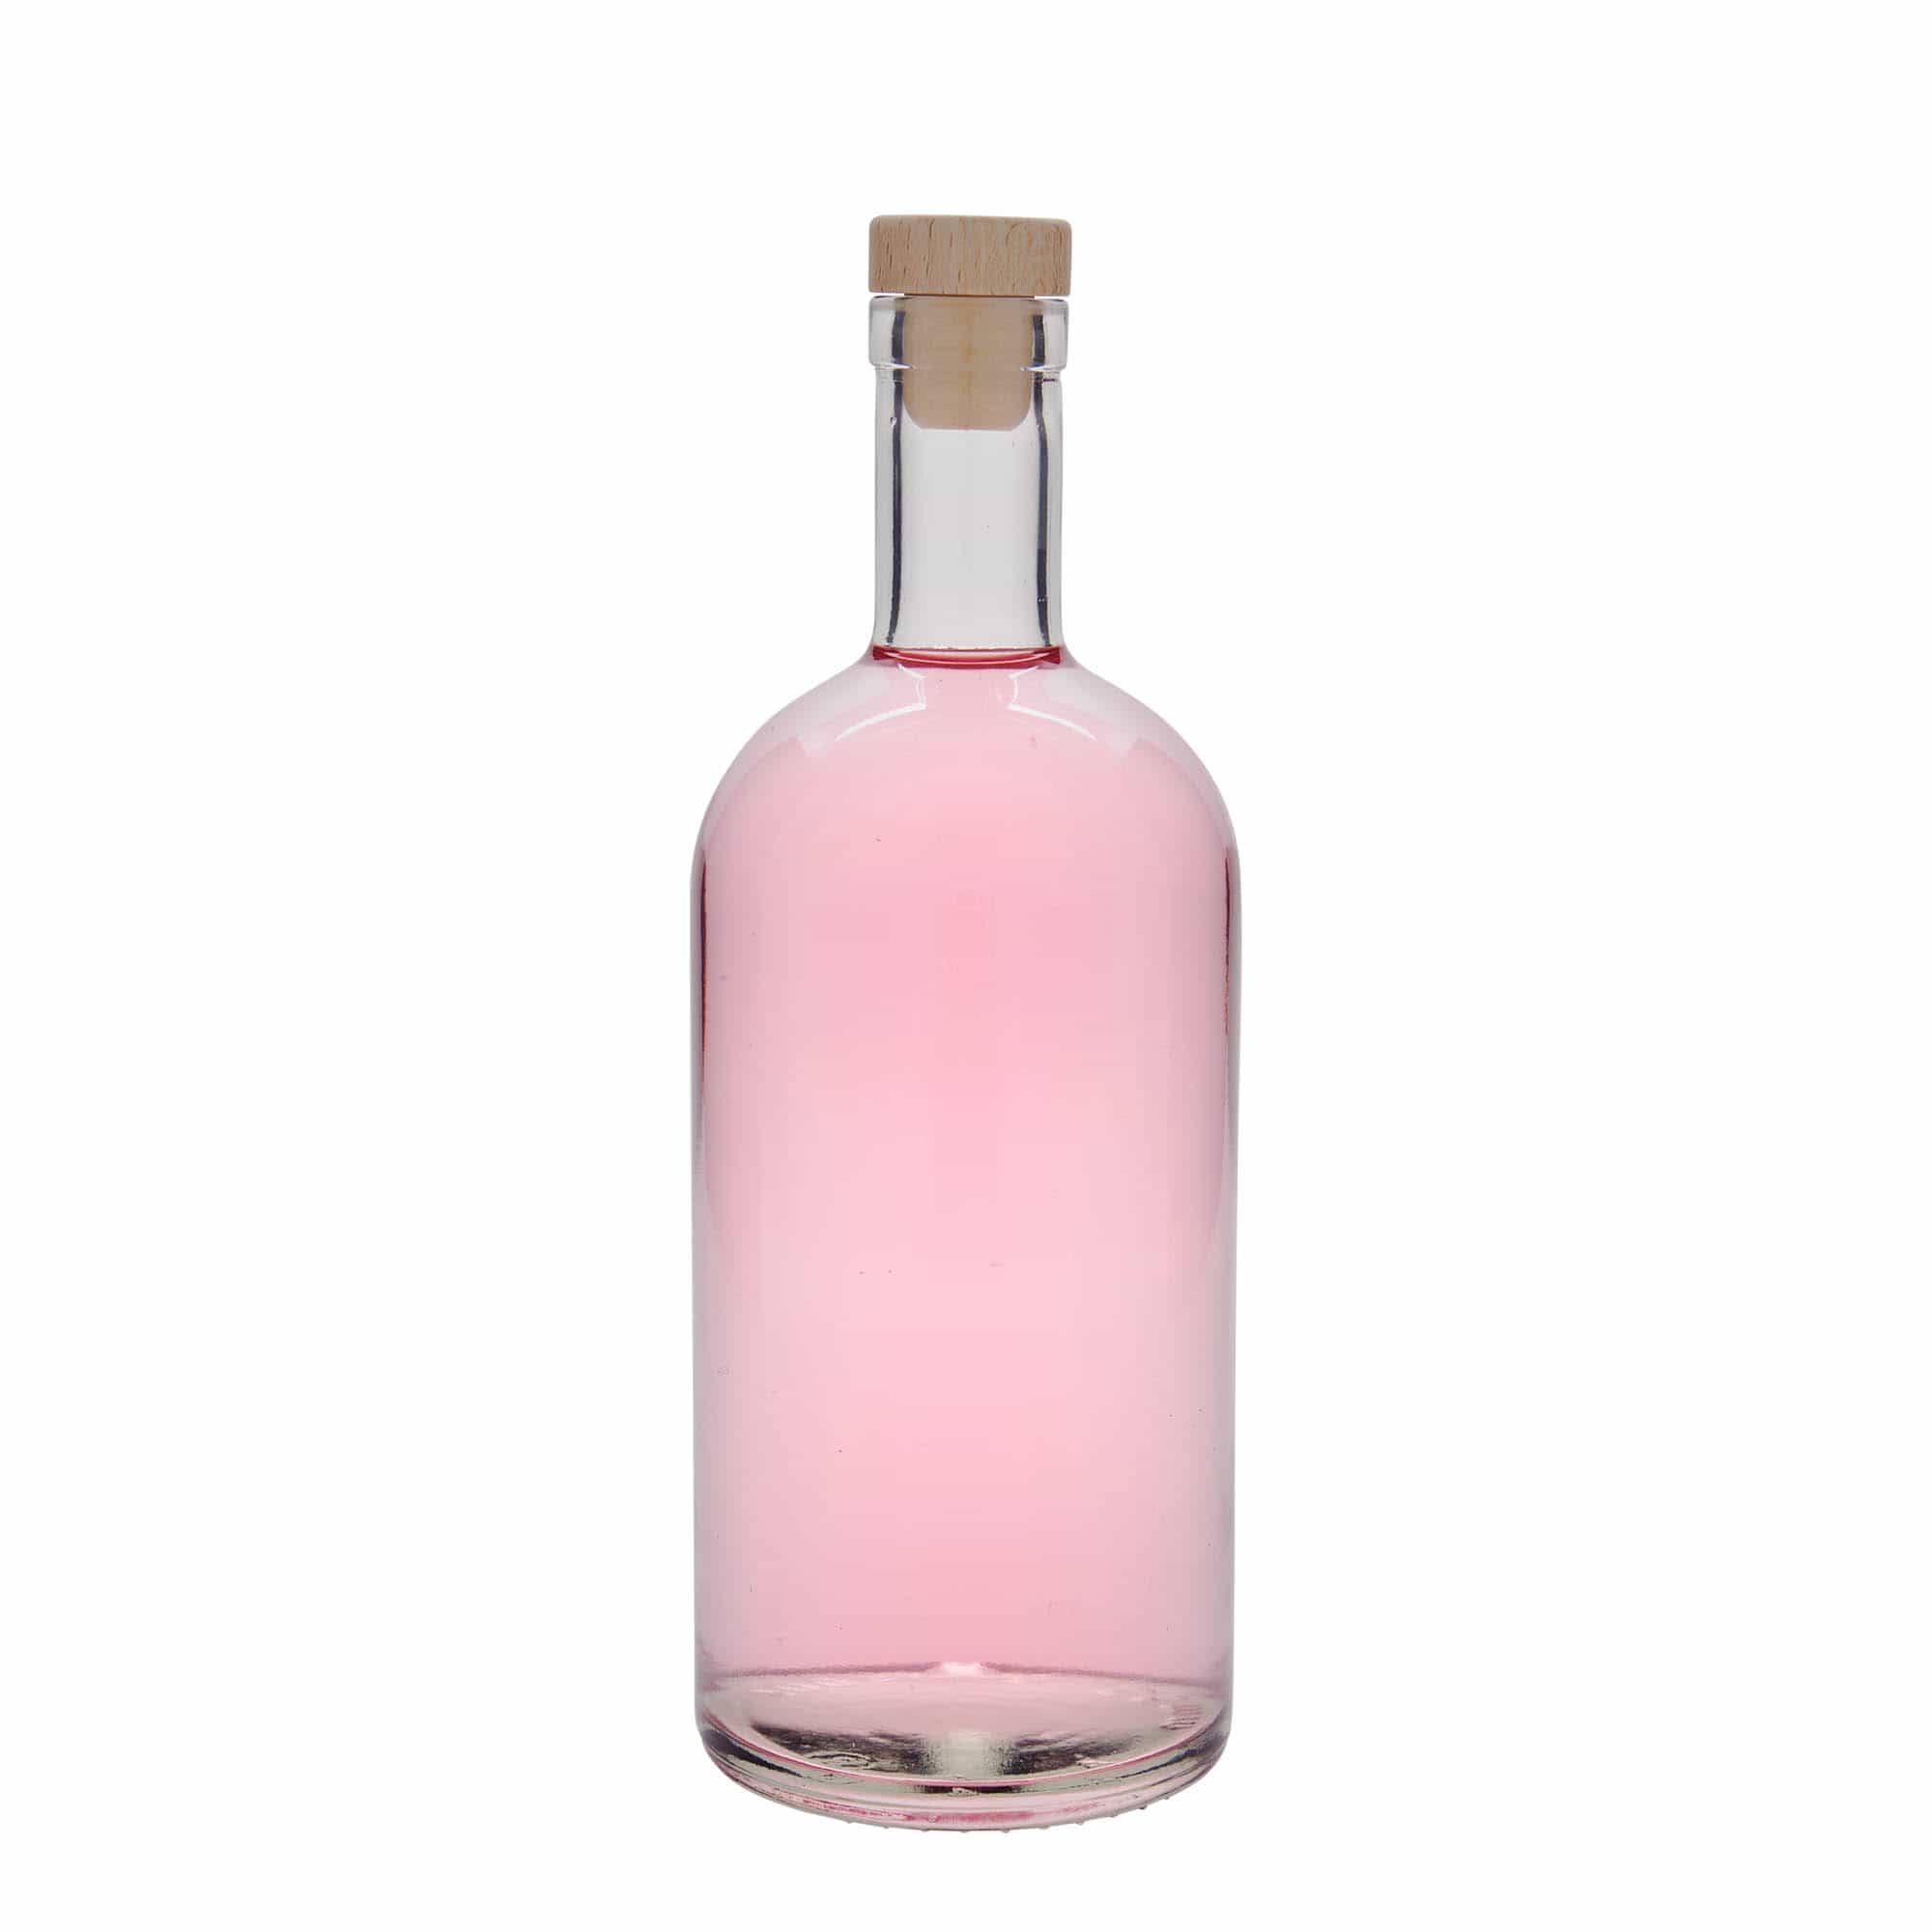 Botella de vidrio 'Gerardino' de 1000 ml, boca: corcho